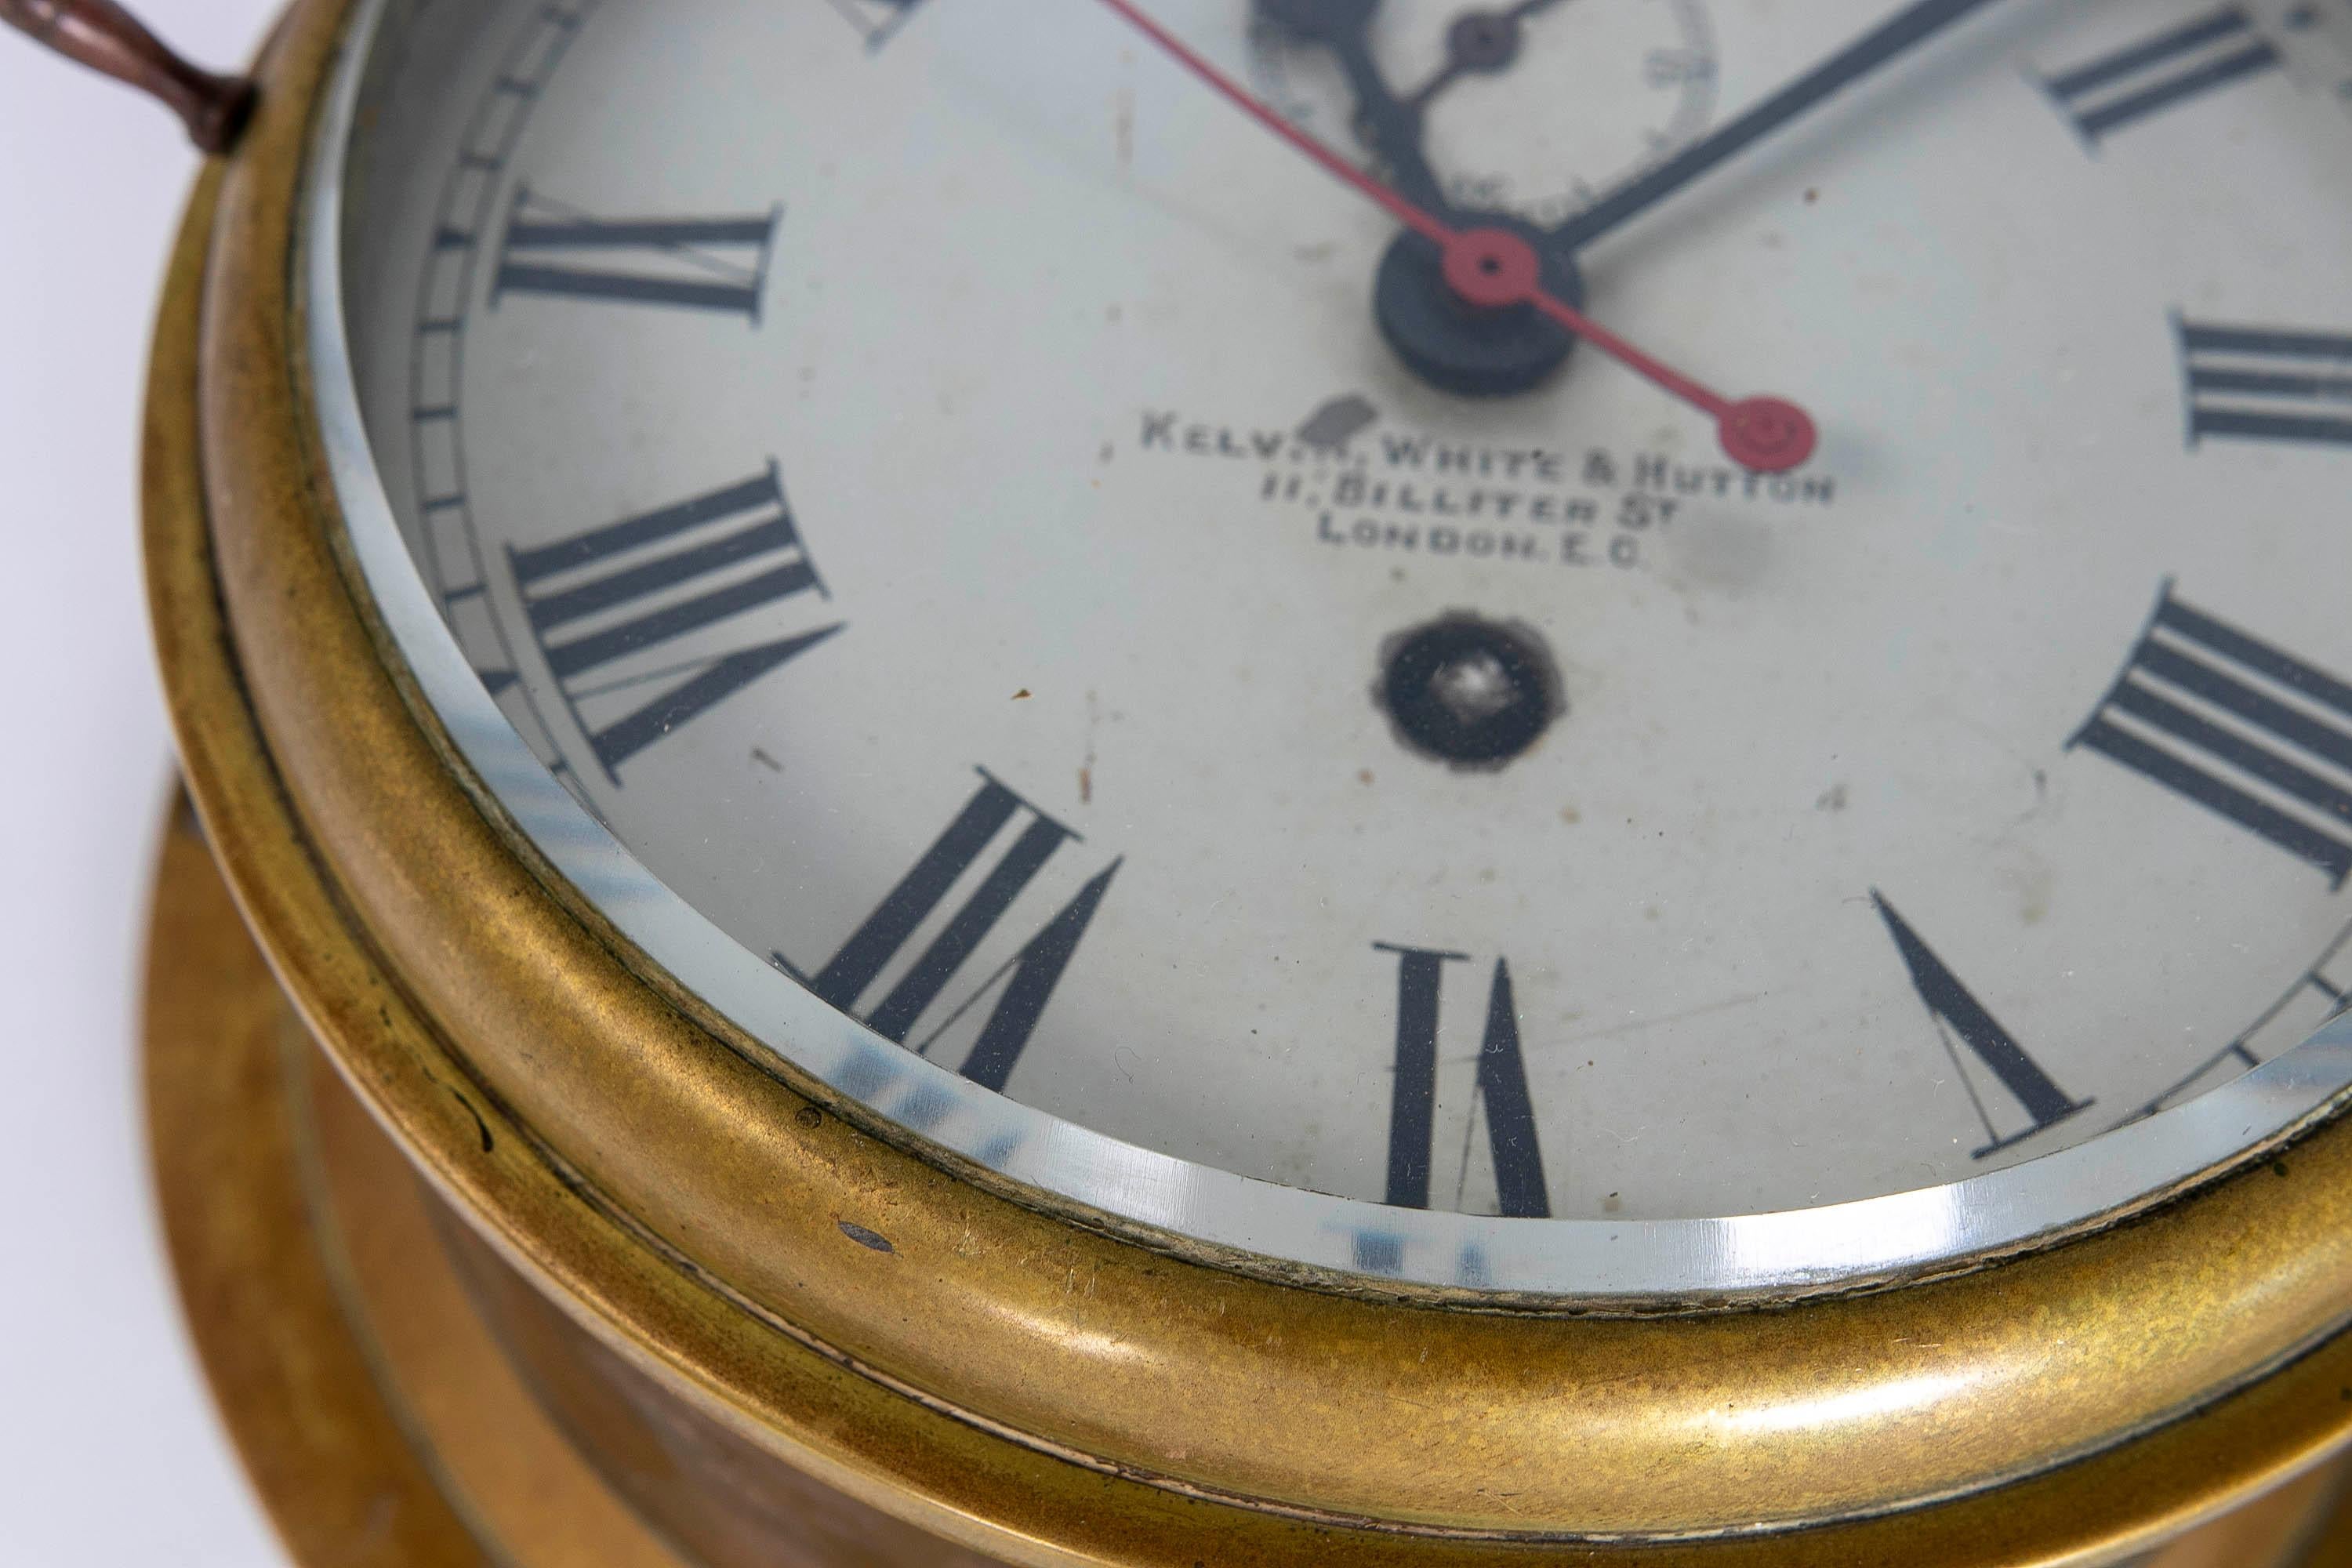 20th Century 19th Century Bronze Ship's Clock from Kelvin White & Hutton, London For Sale